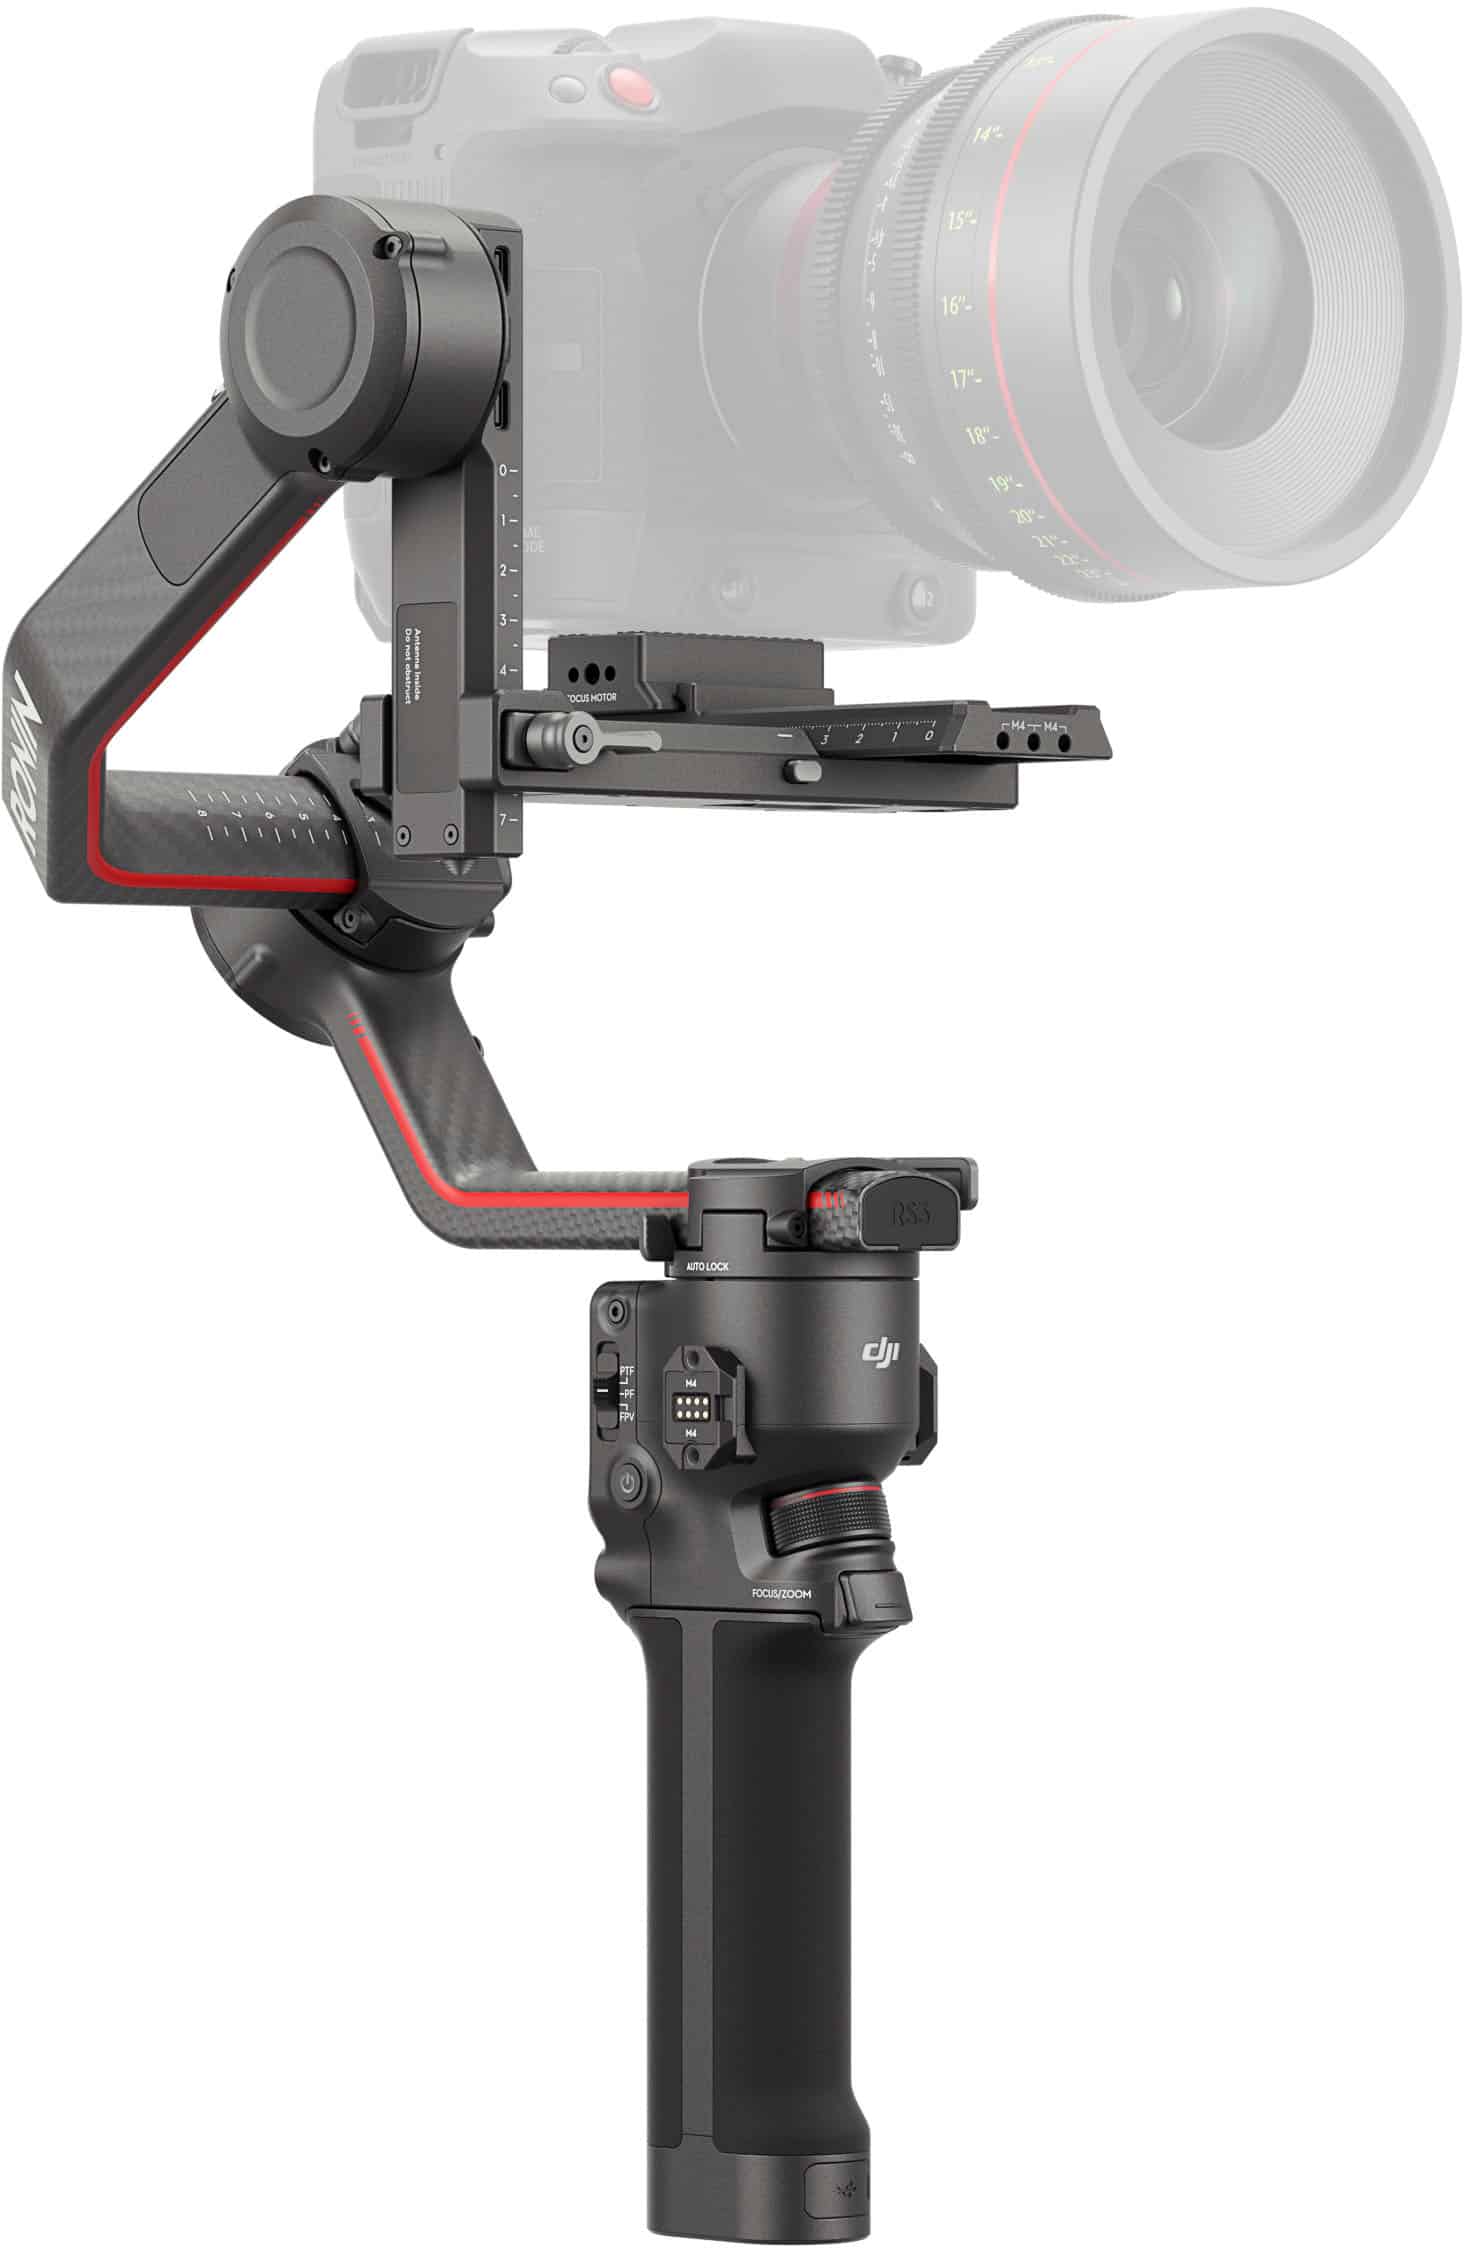 DJIの新型カメラジンバル「RS 3」の製品画像がリーク | TEXAL